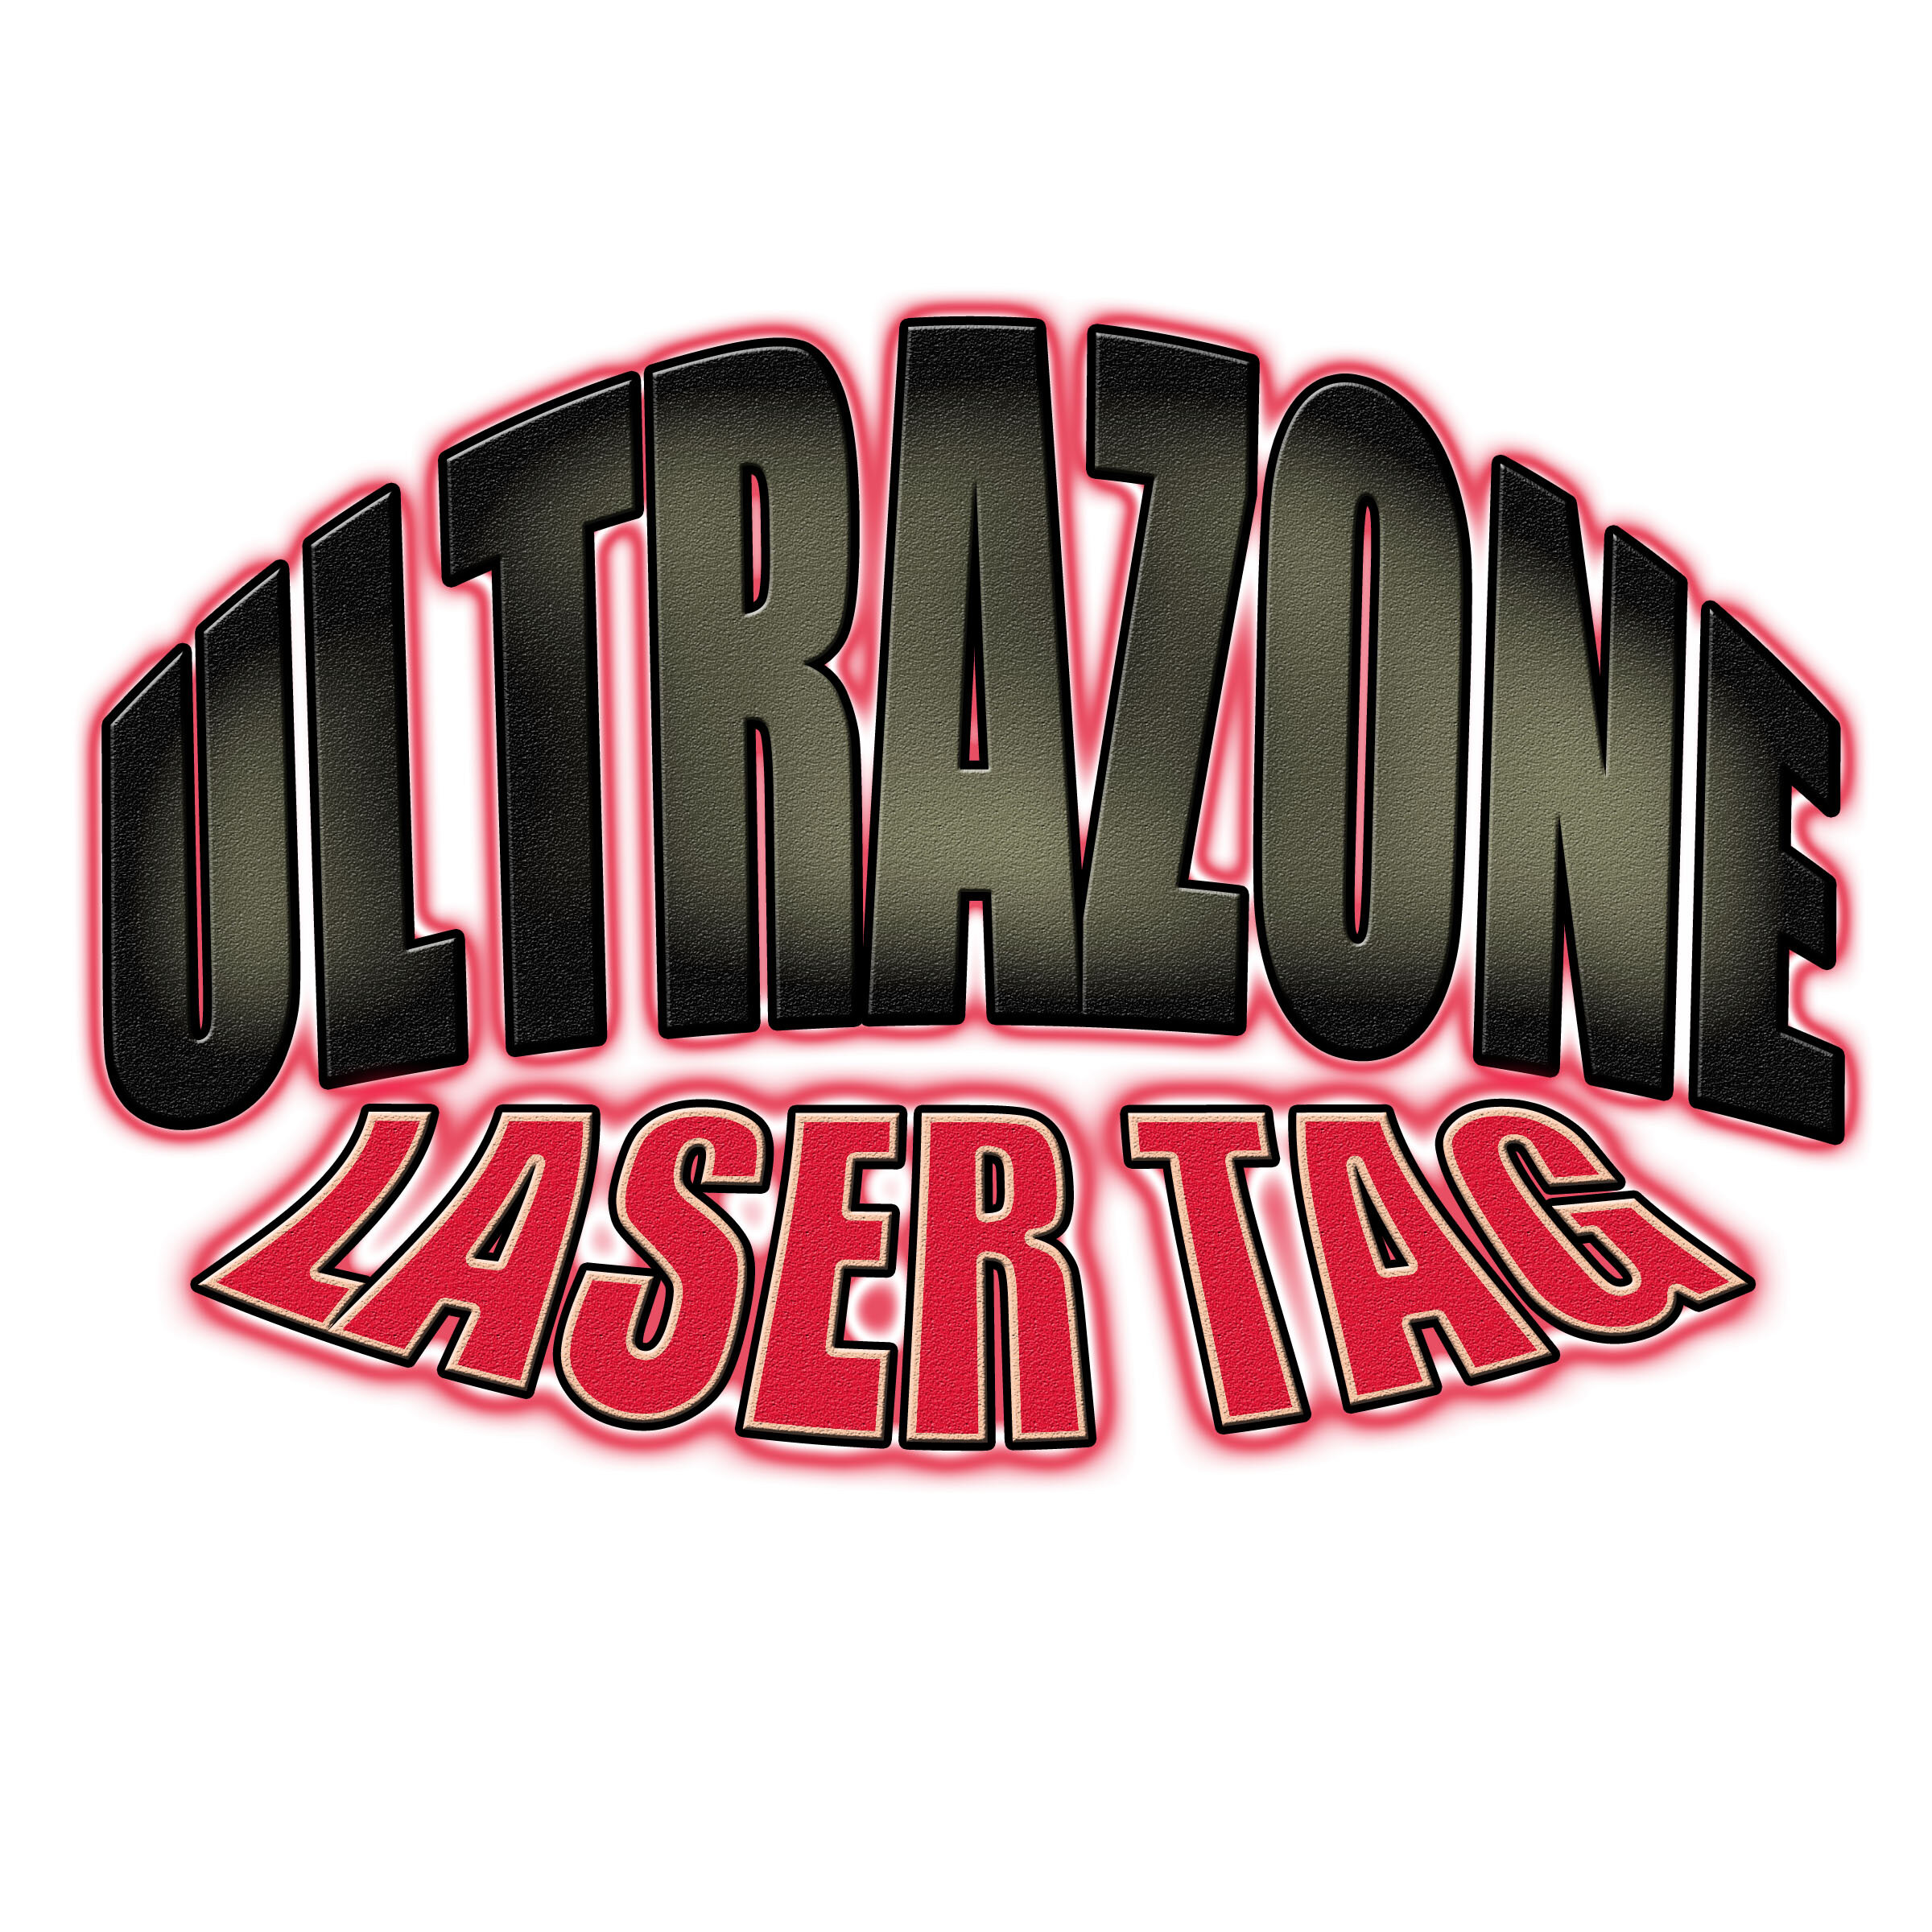 Ultrazone Laser Tag